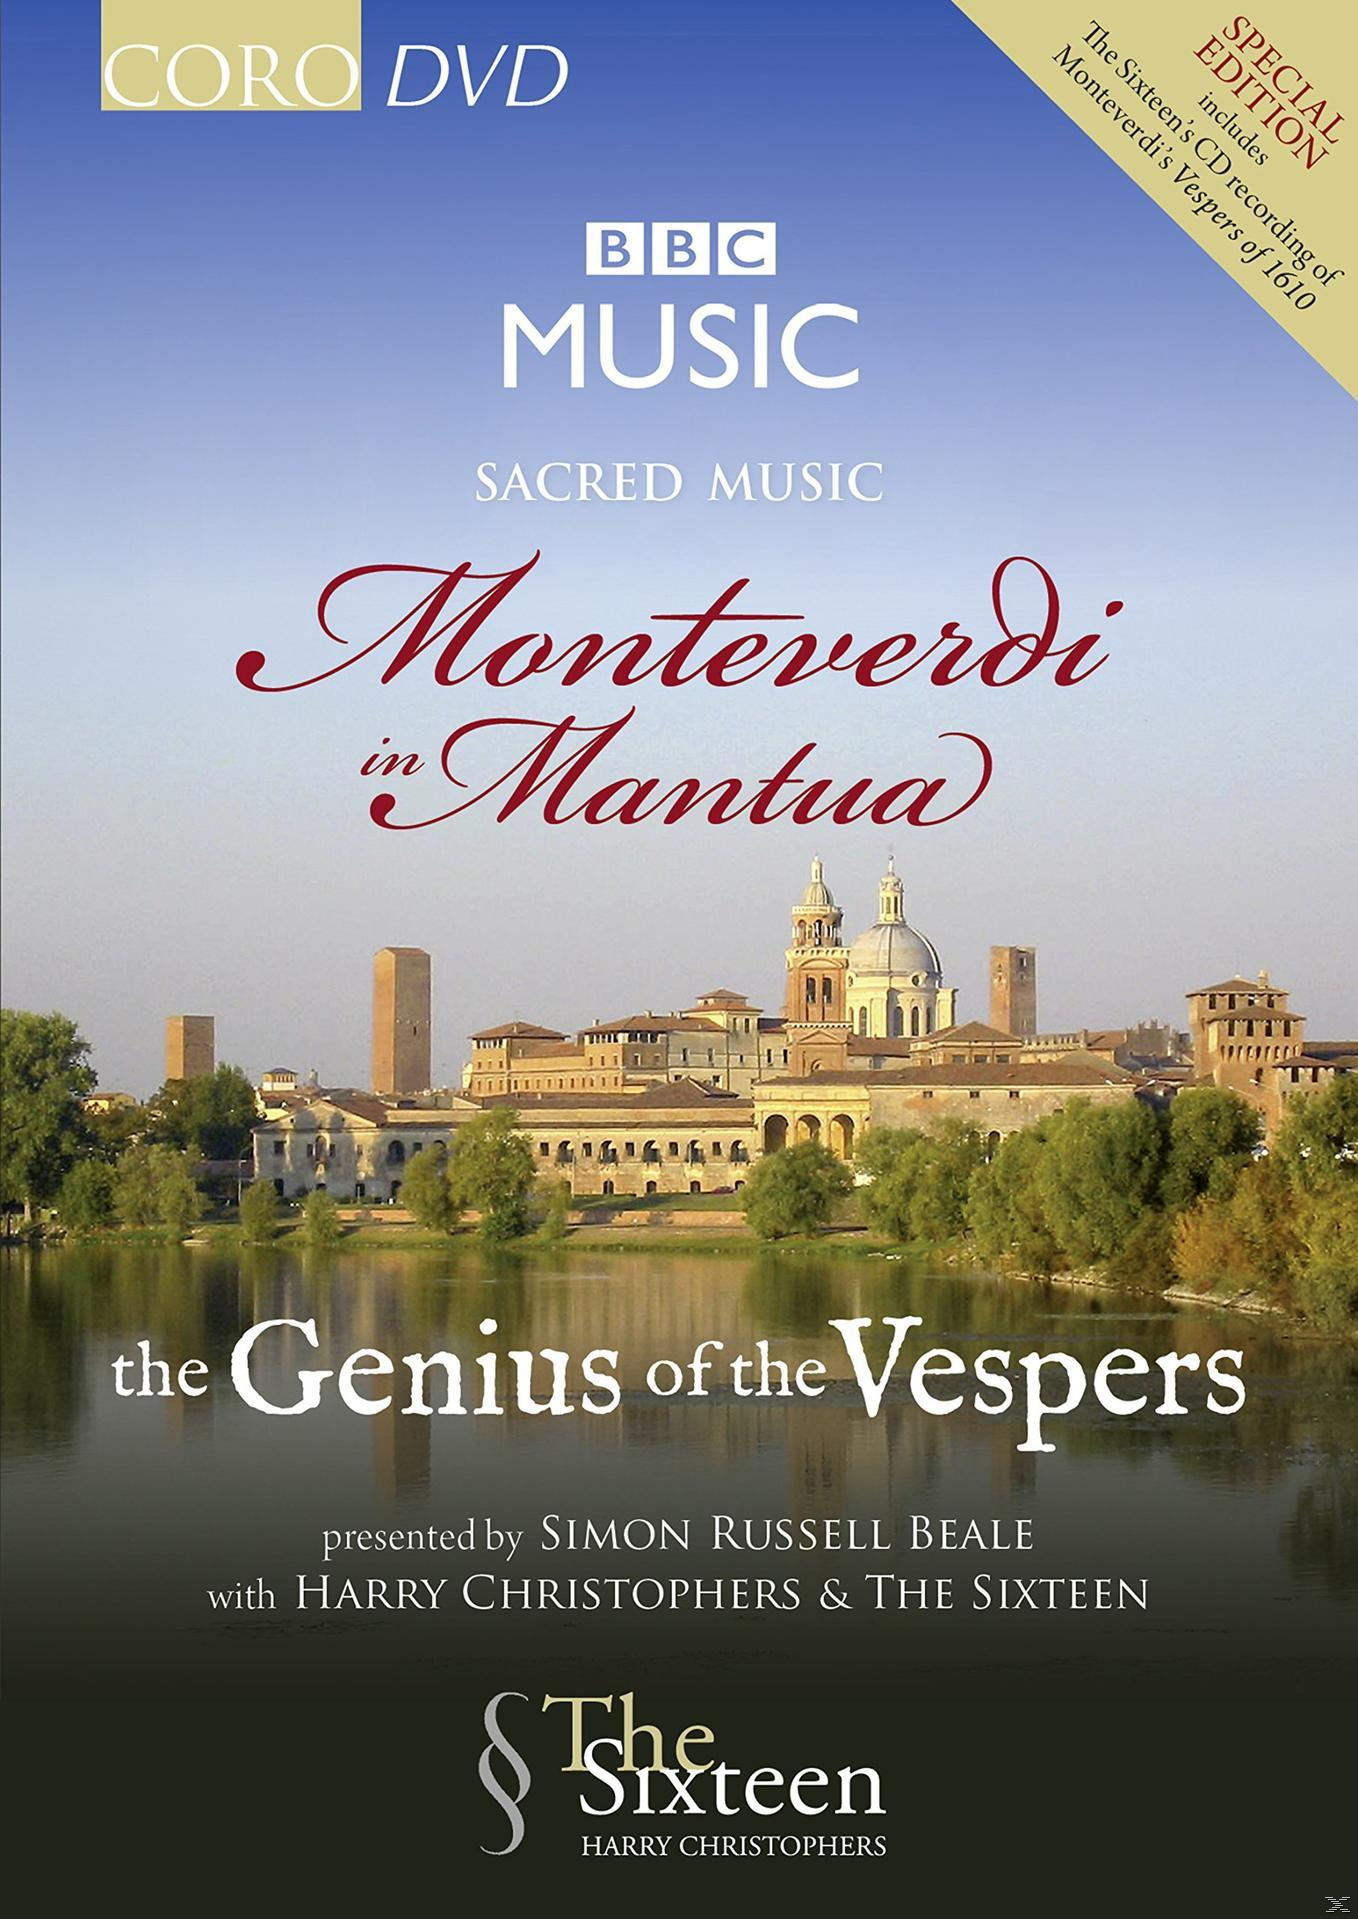 (Dvd+2 Monteverdi CD) - (DVD Cd-Version) - + Sixteen Mantua The In